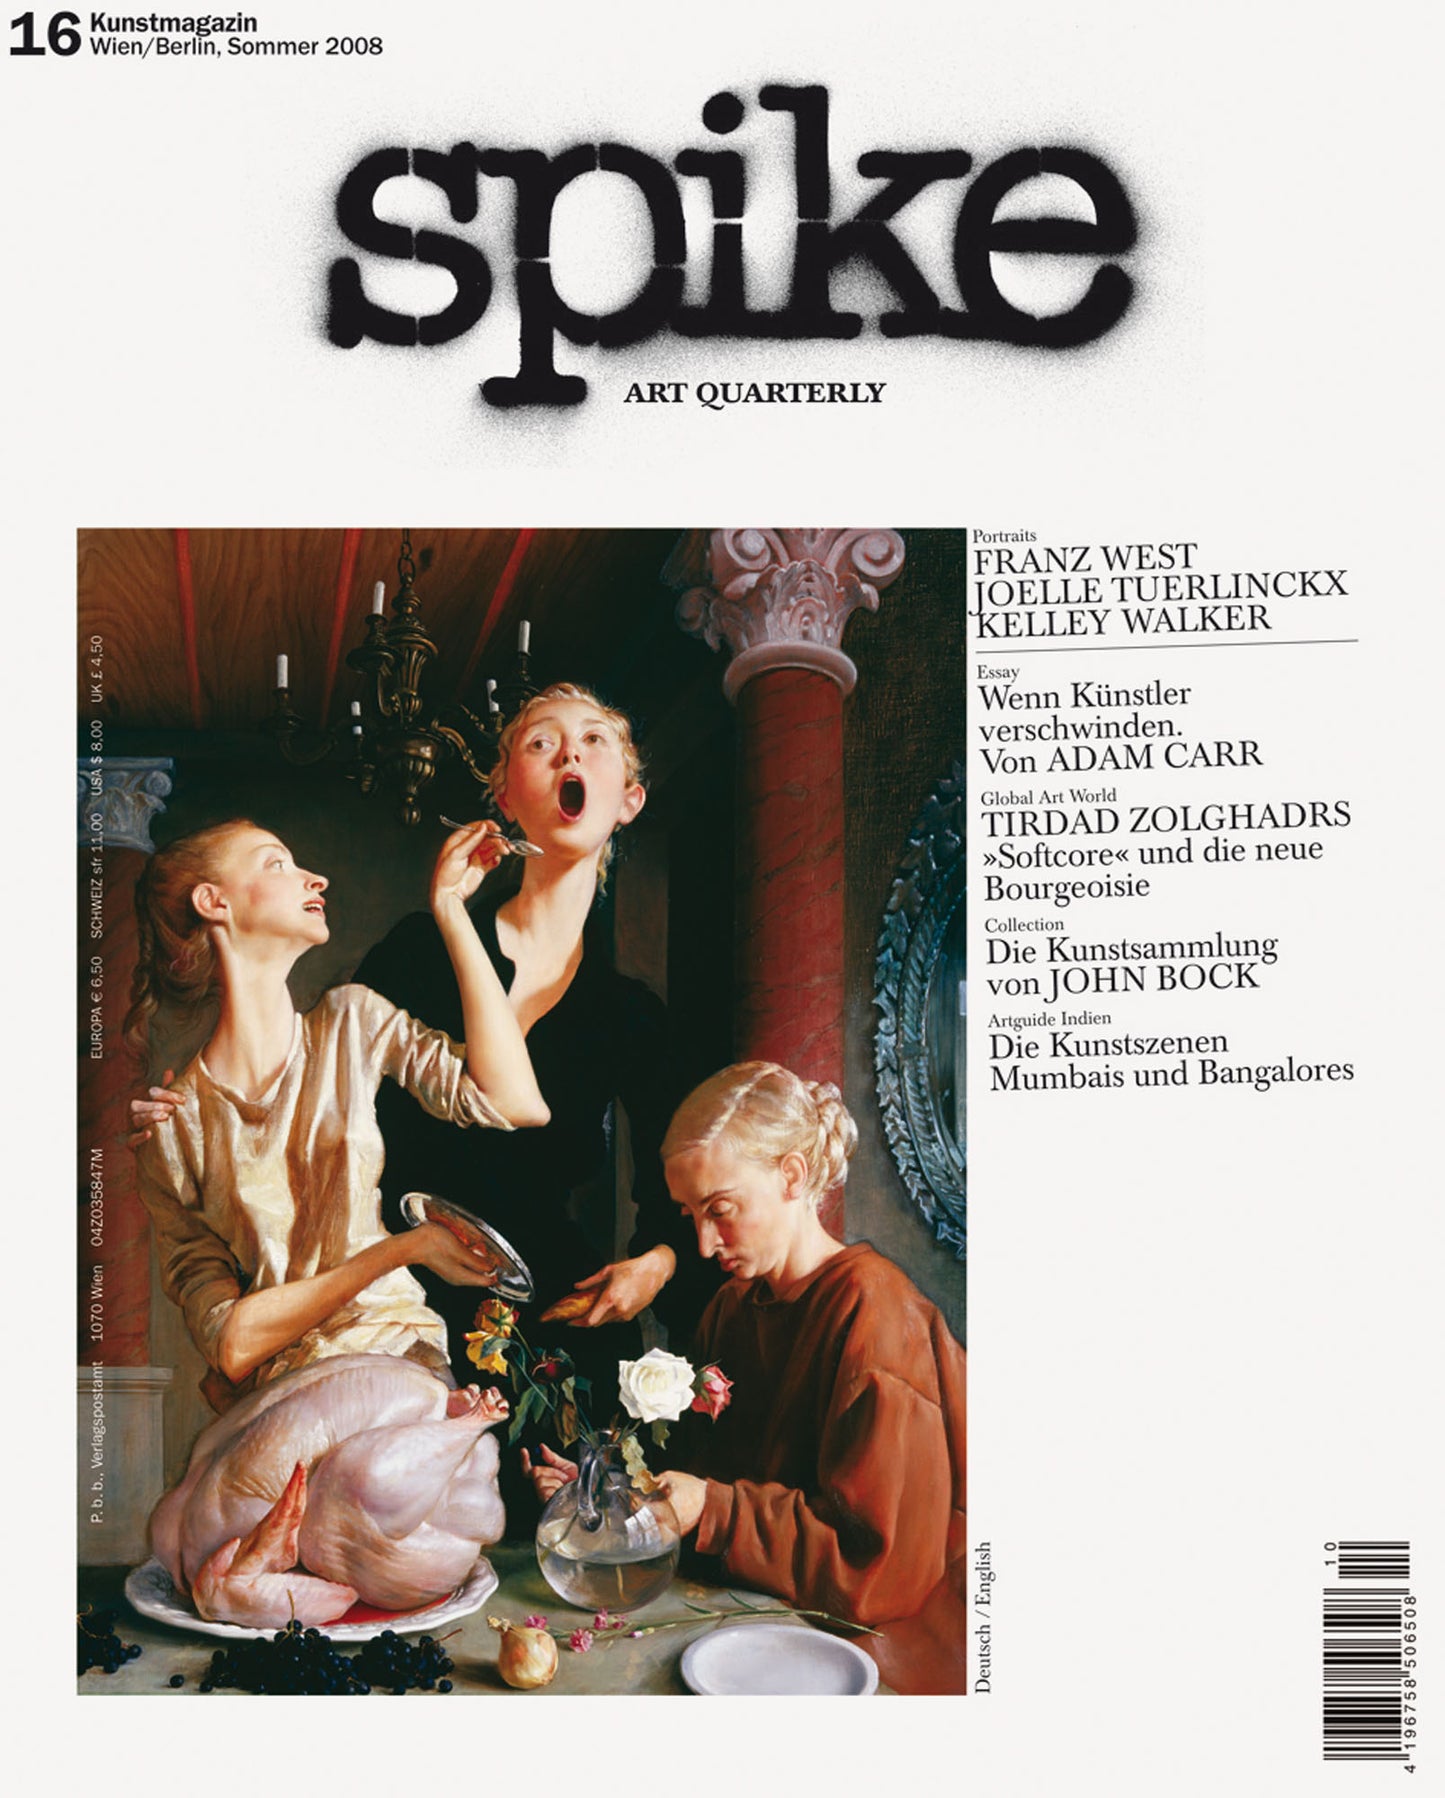 ISSUE 16 (SUMMER 2008)